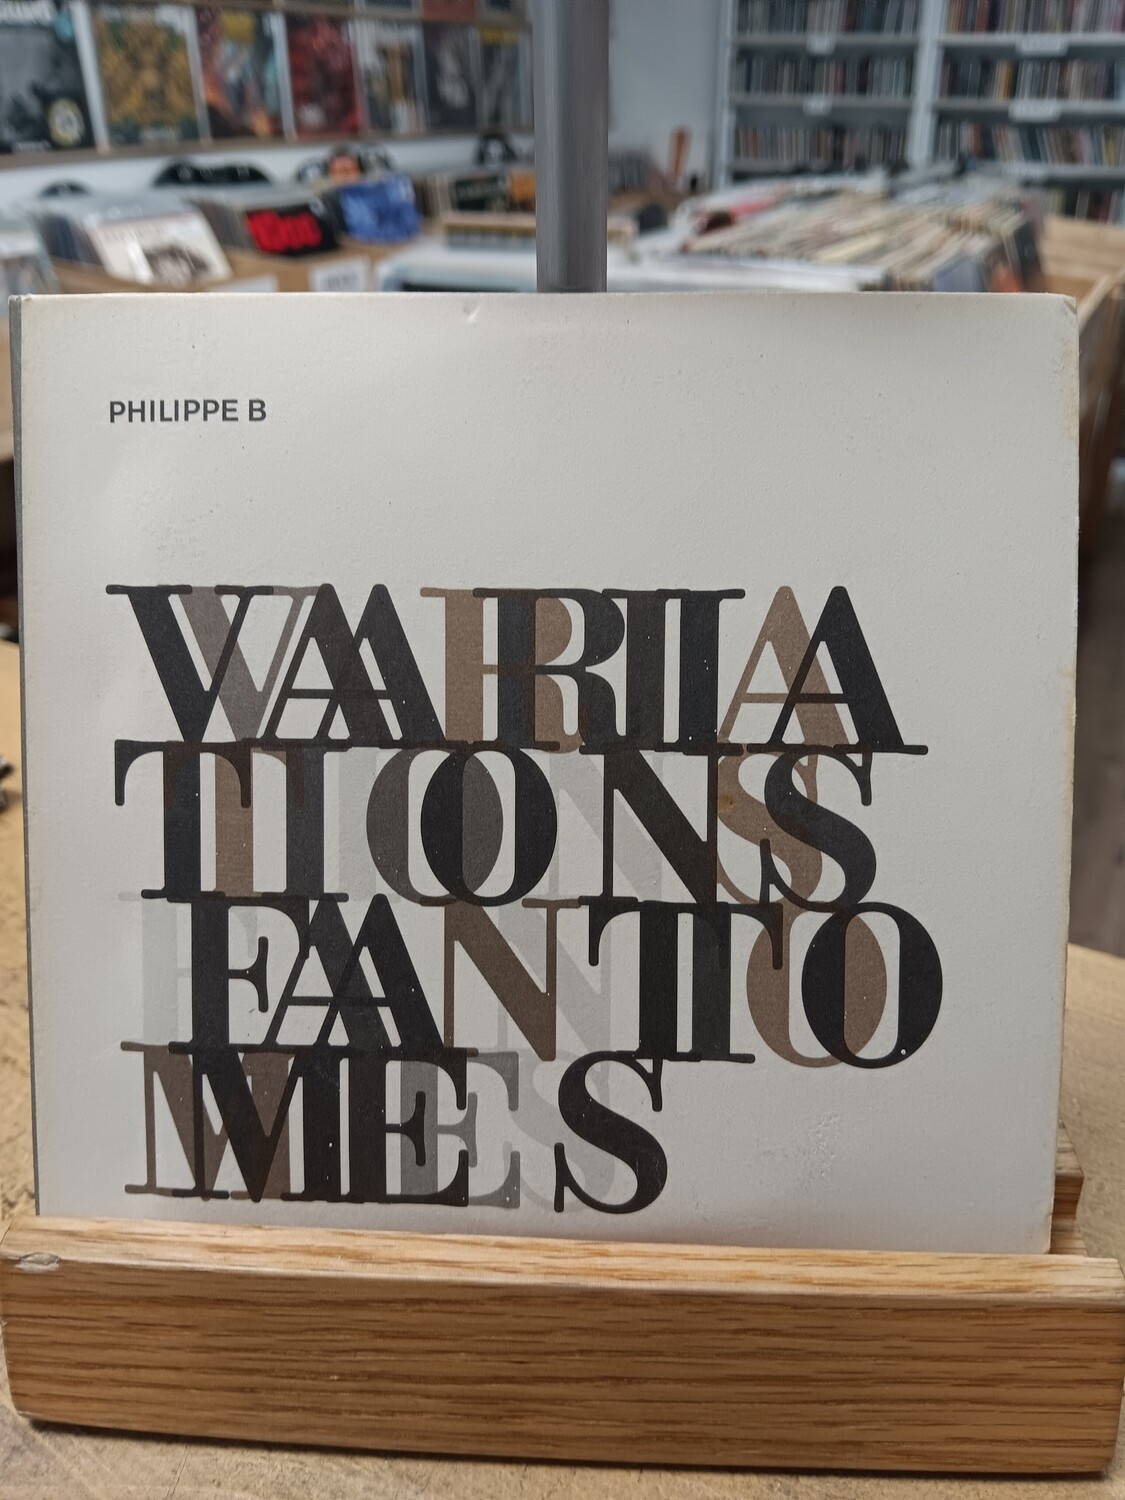 PHILIPPE B - Variations Fantômes (CD)